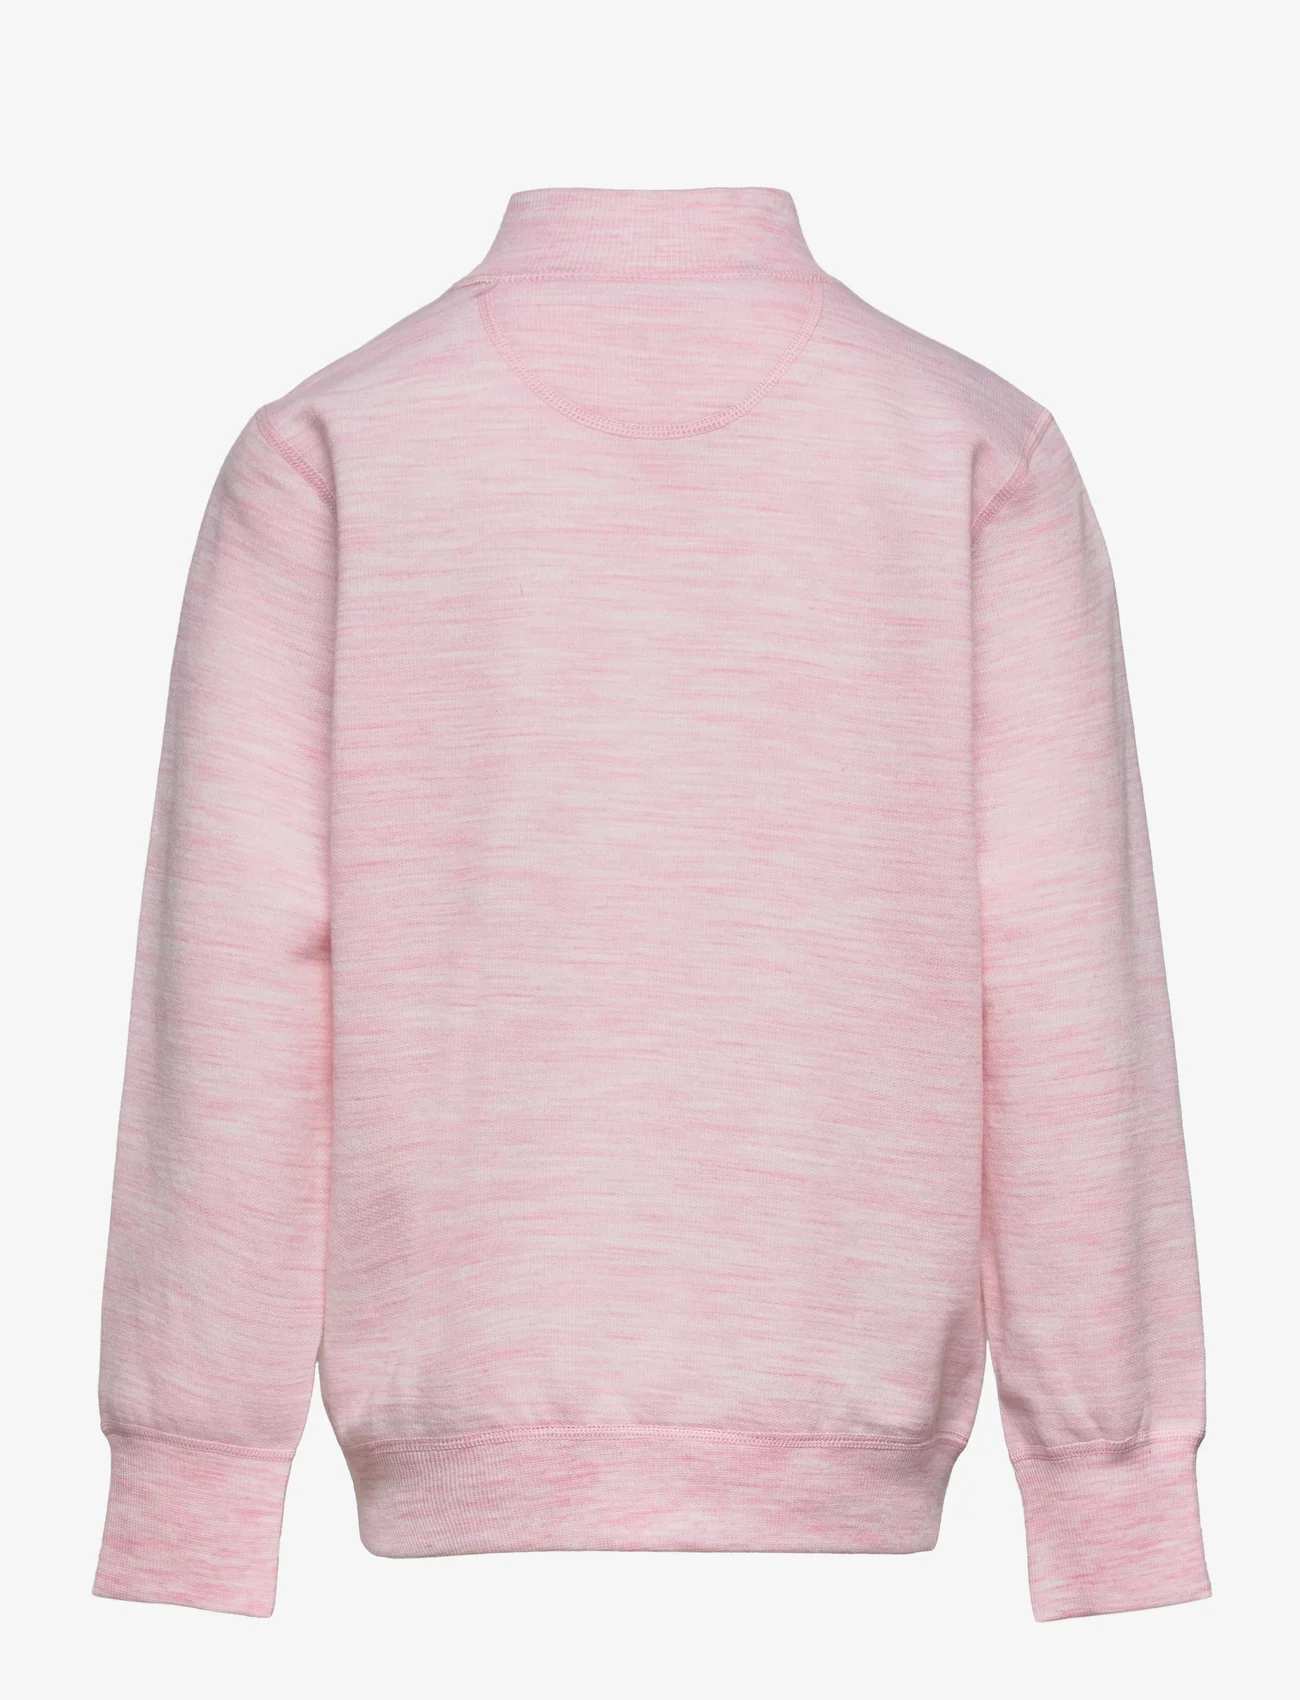 Reima - Sweater, Mahin - svetarit - pale rose - 1